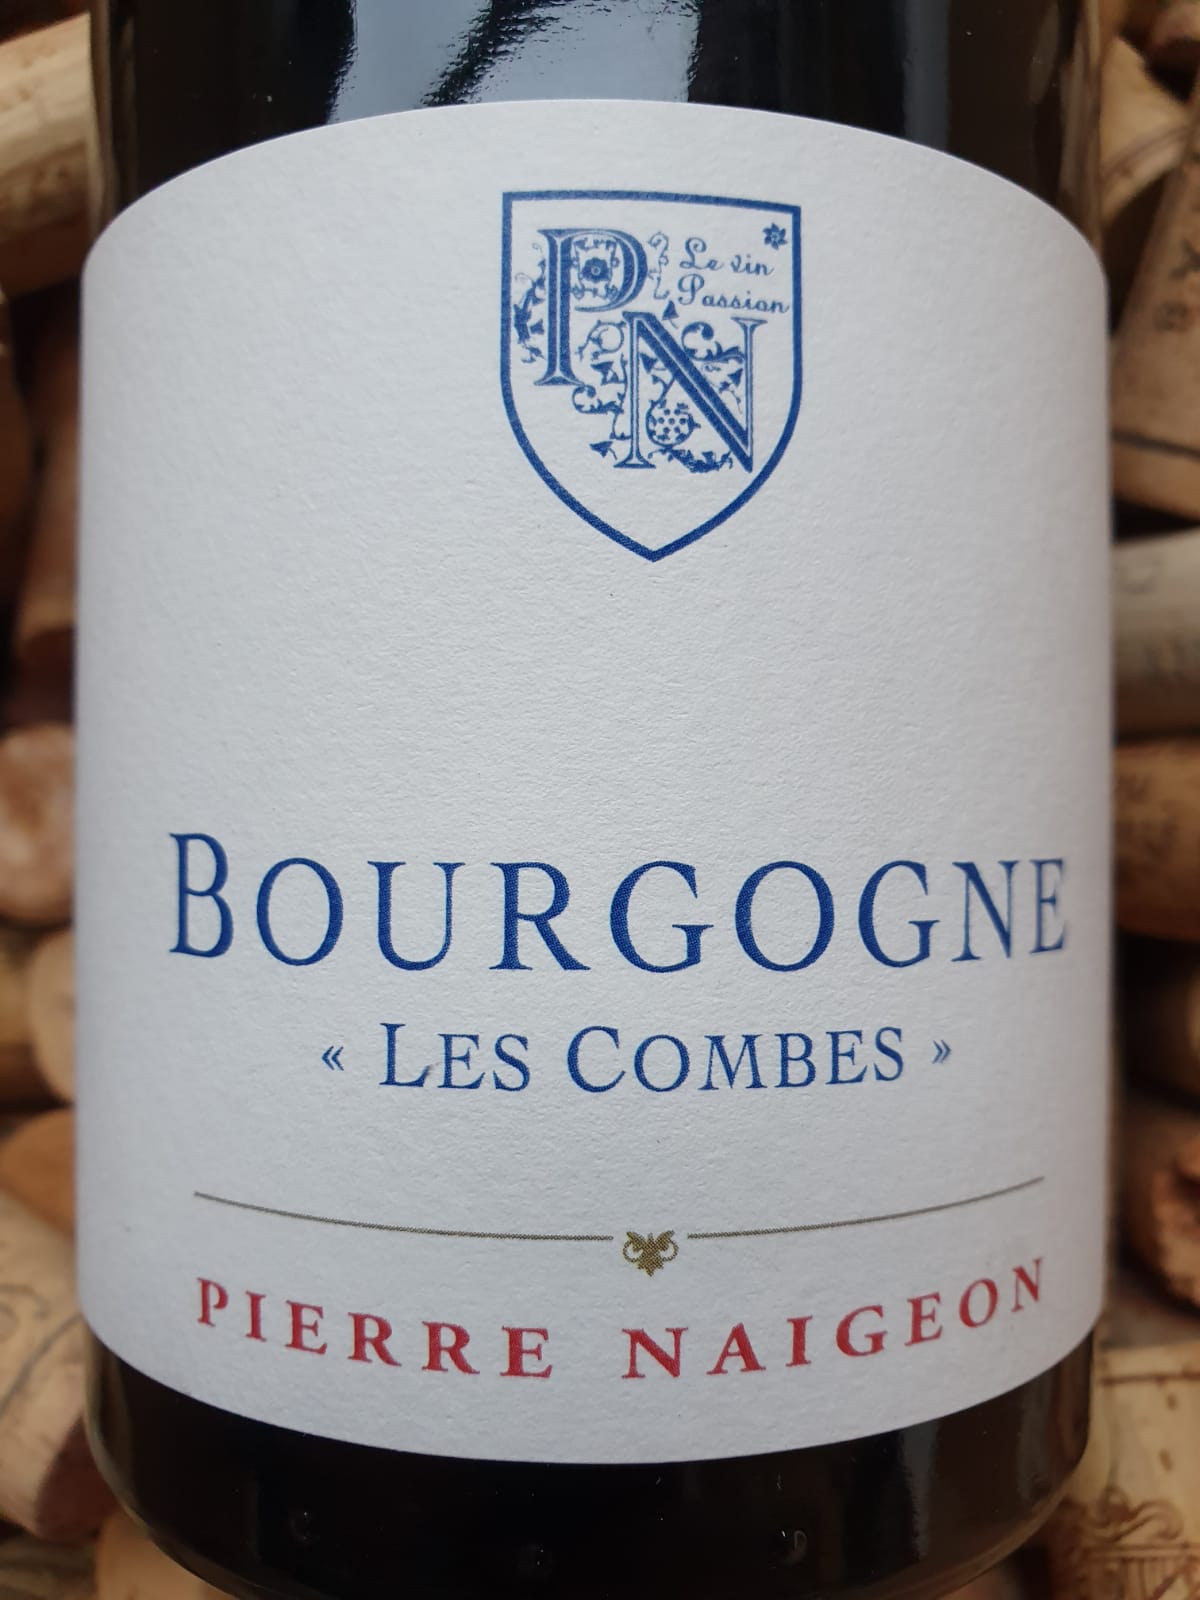 Pierre Naigeon Bourgogne "Les Combes"